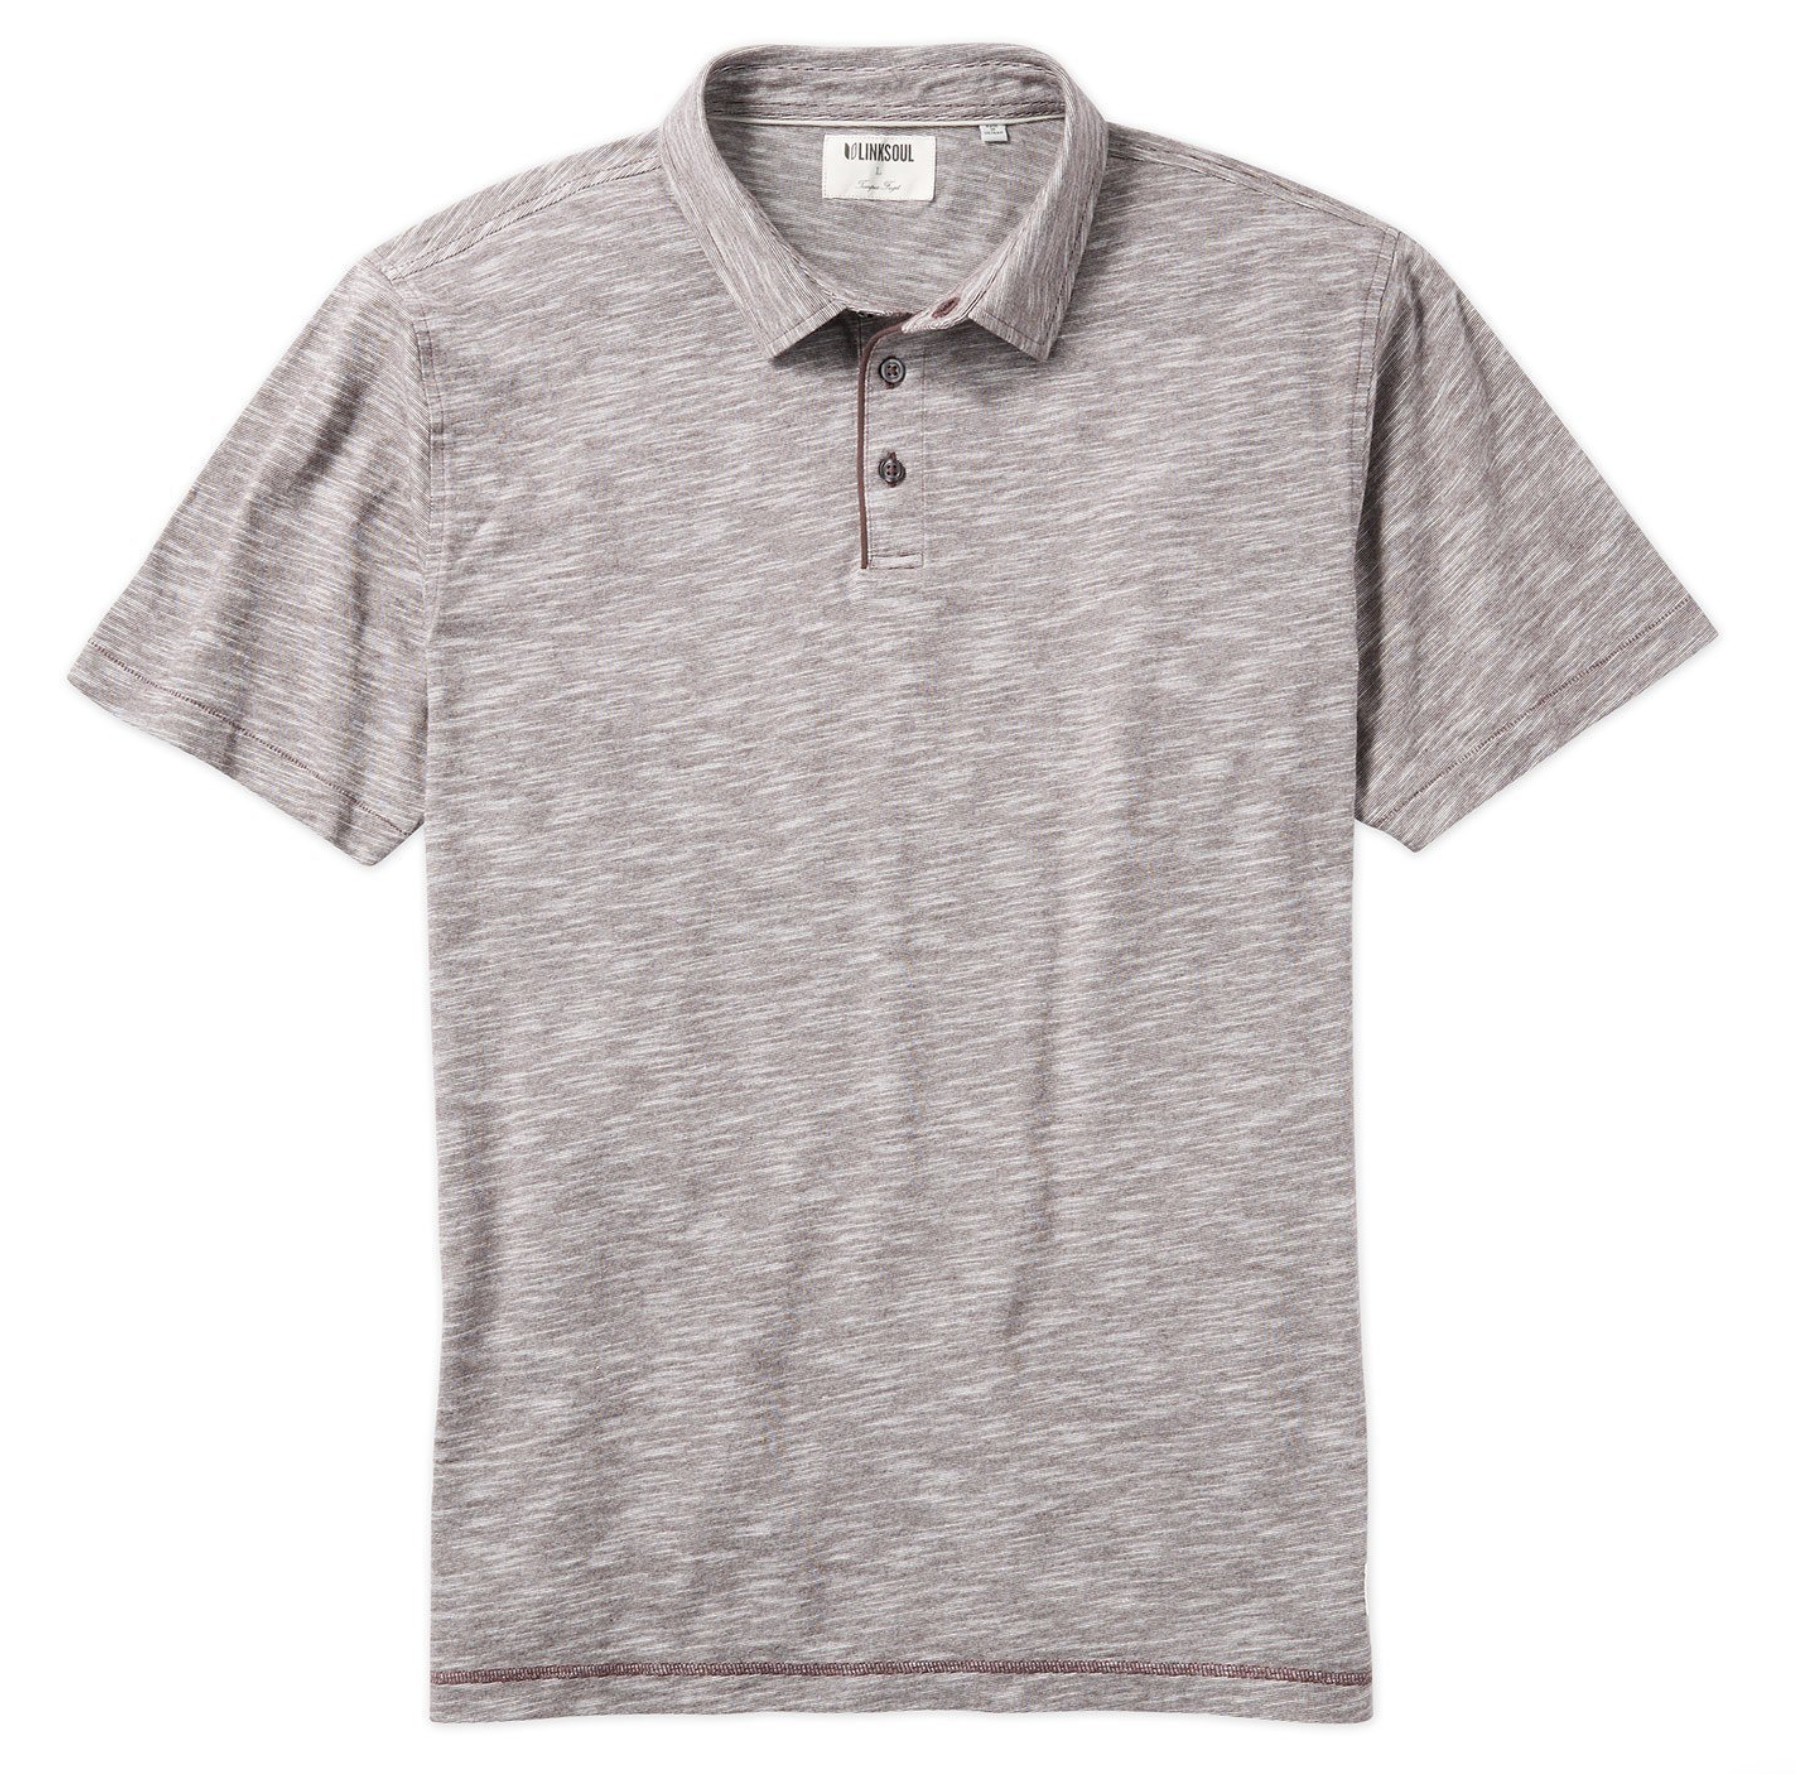 Linksoul | Martin Textured Polo Shirt